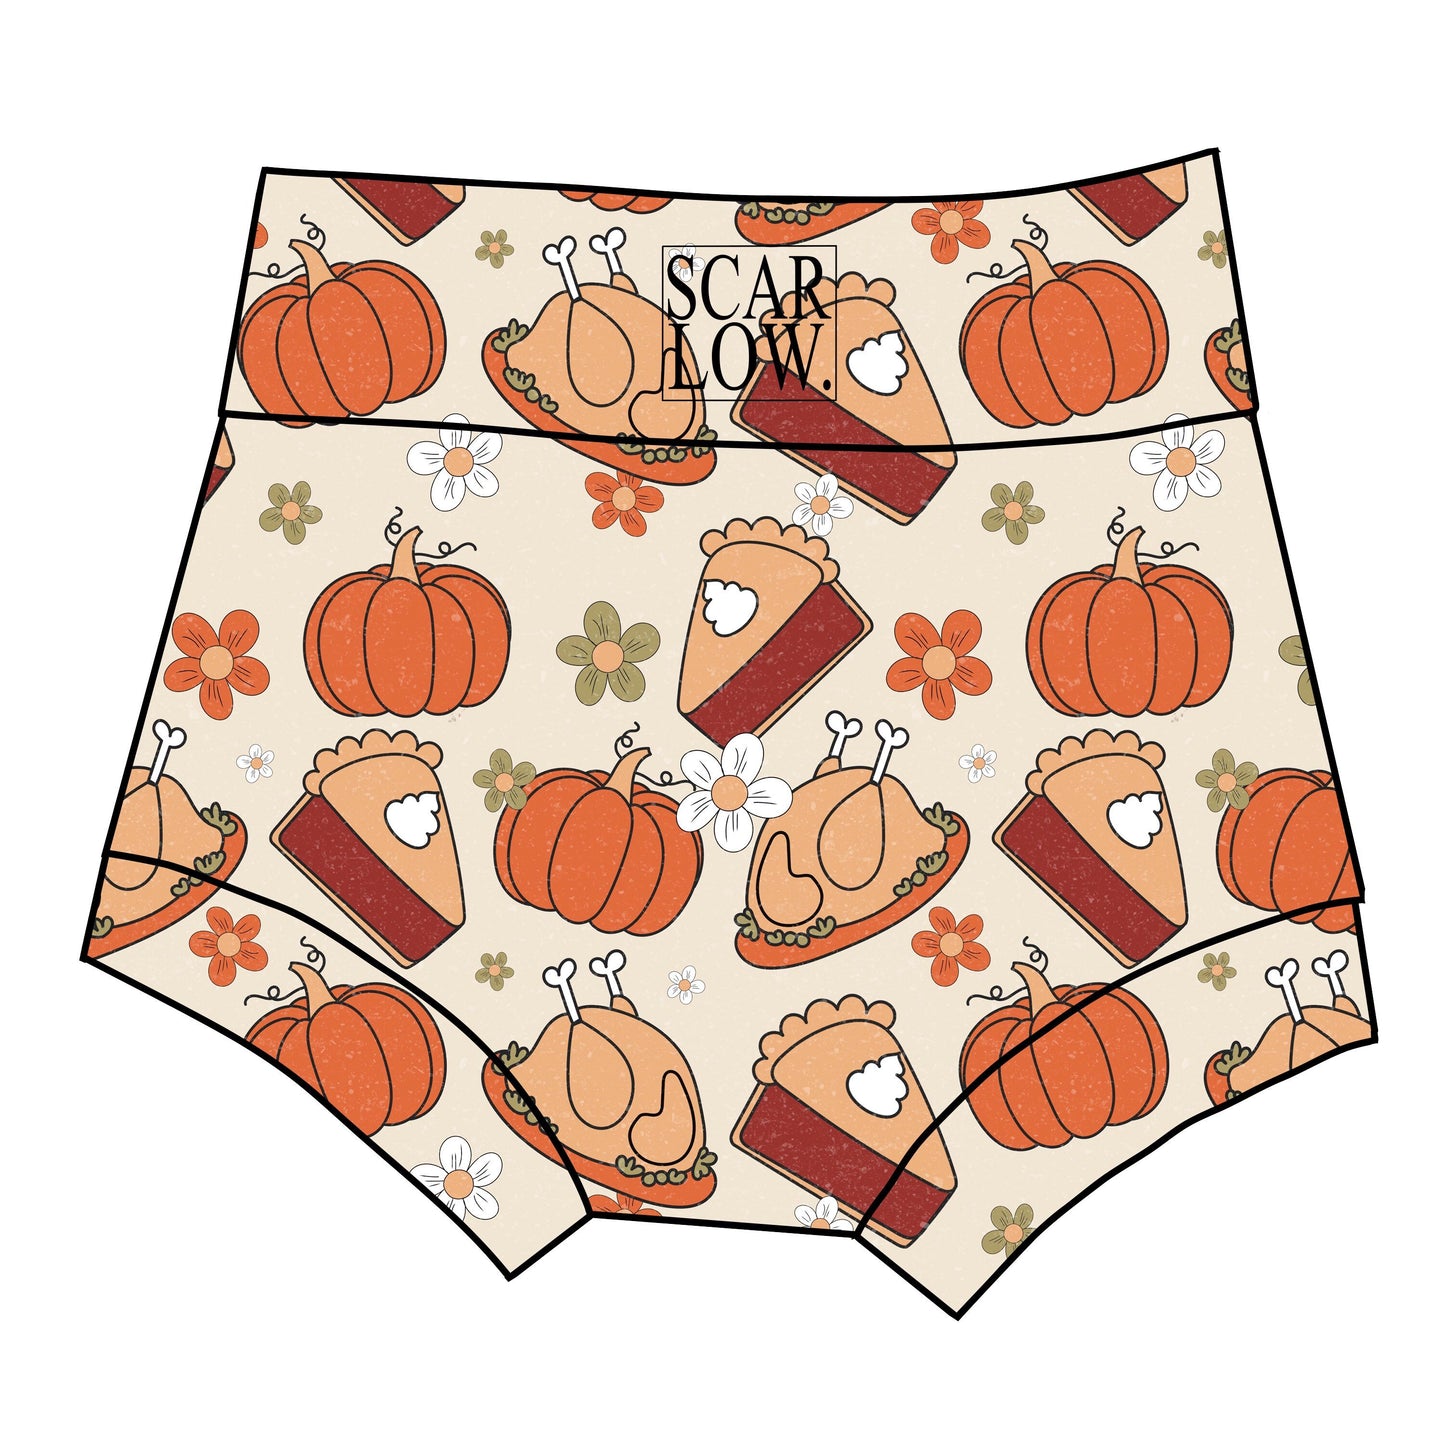 Thanksgiving Seamless Pattern-Fall Sublimation Digital Design Download-Pumpkin pie seamless file, pumpkin sublimation, fall seamless file